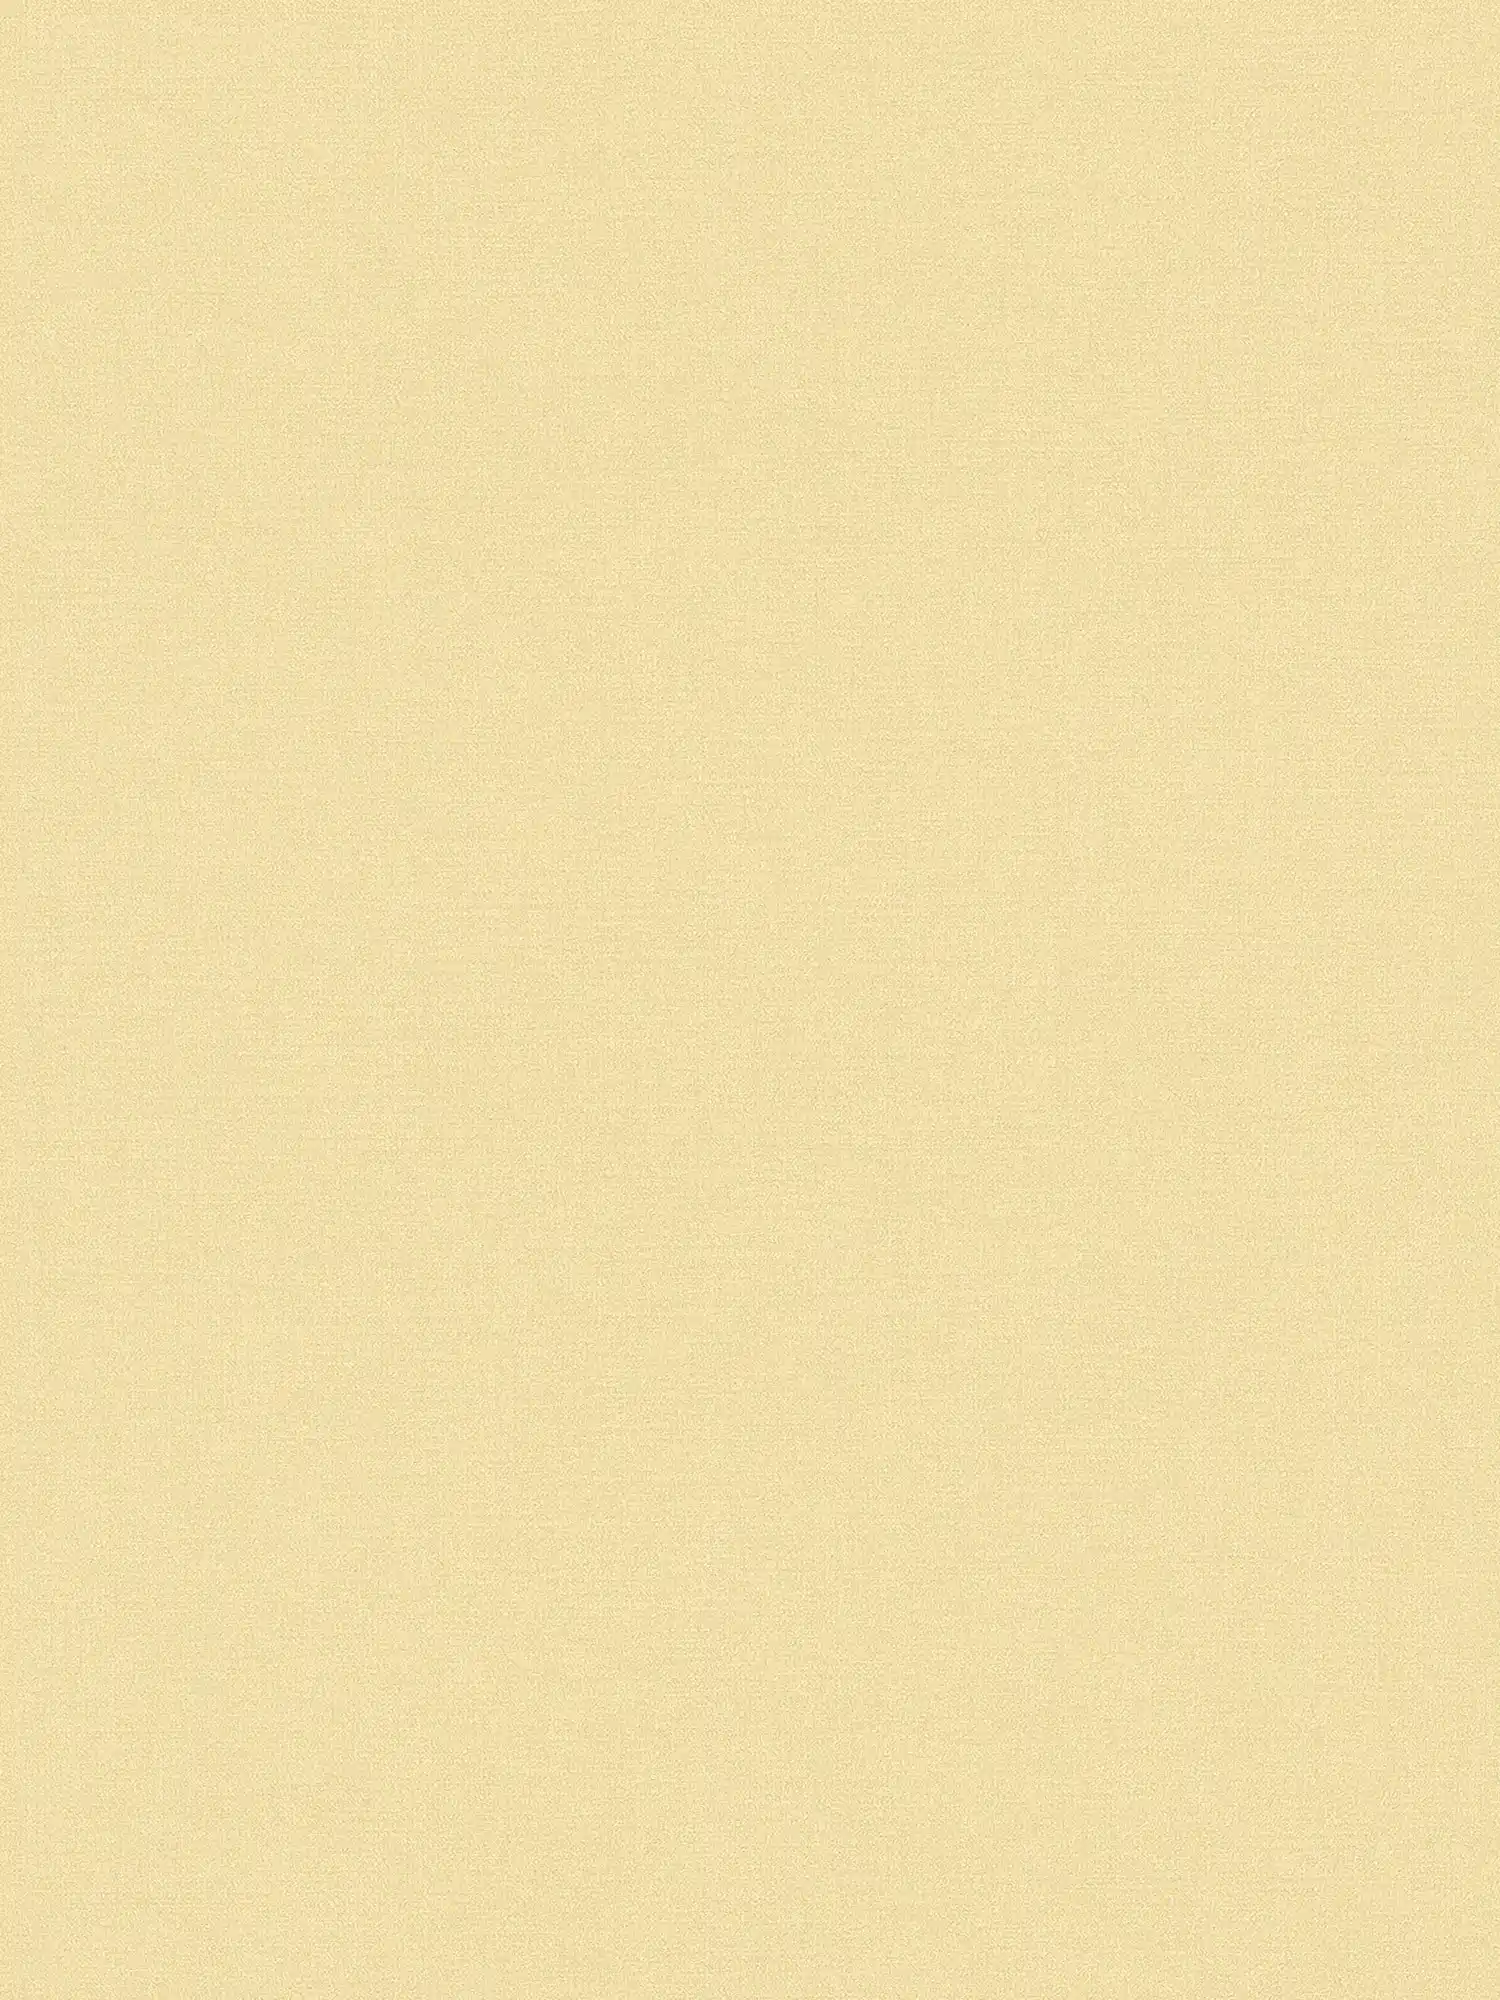 Plain non-woven wallpaper in a warm shade - yellow
